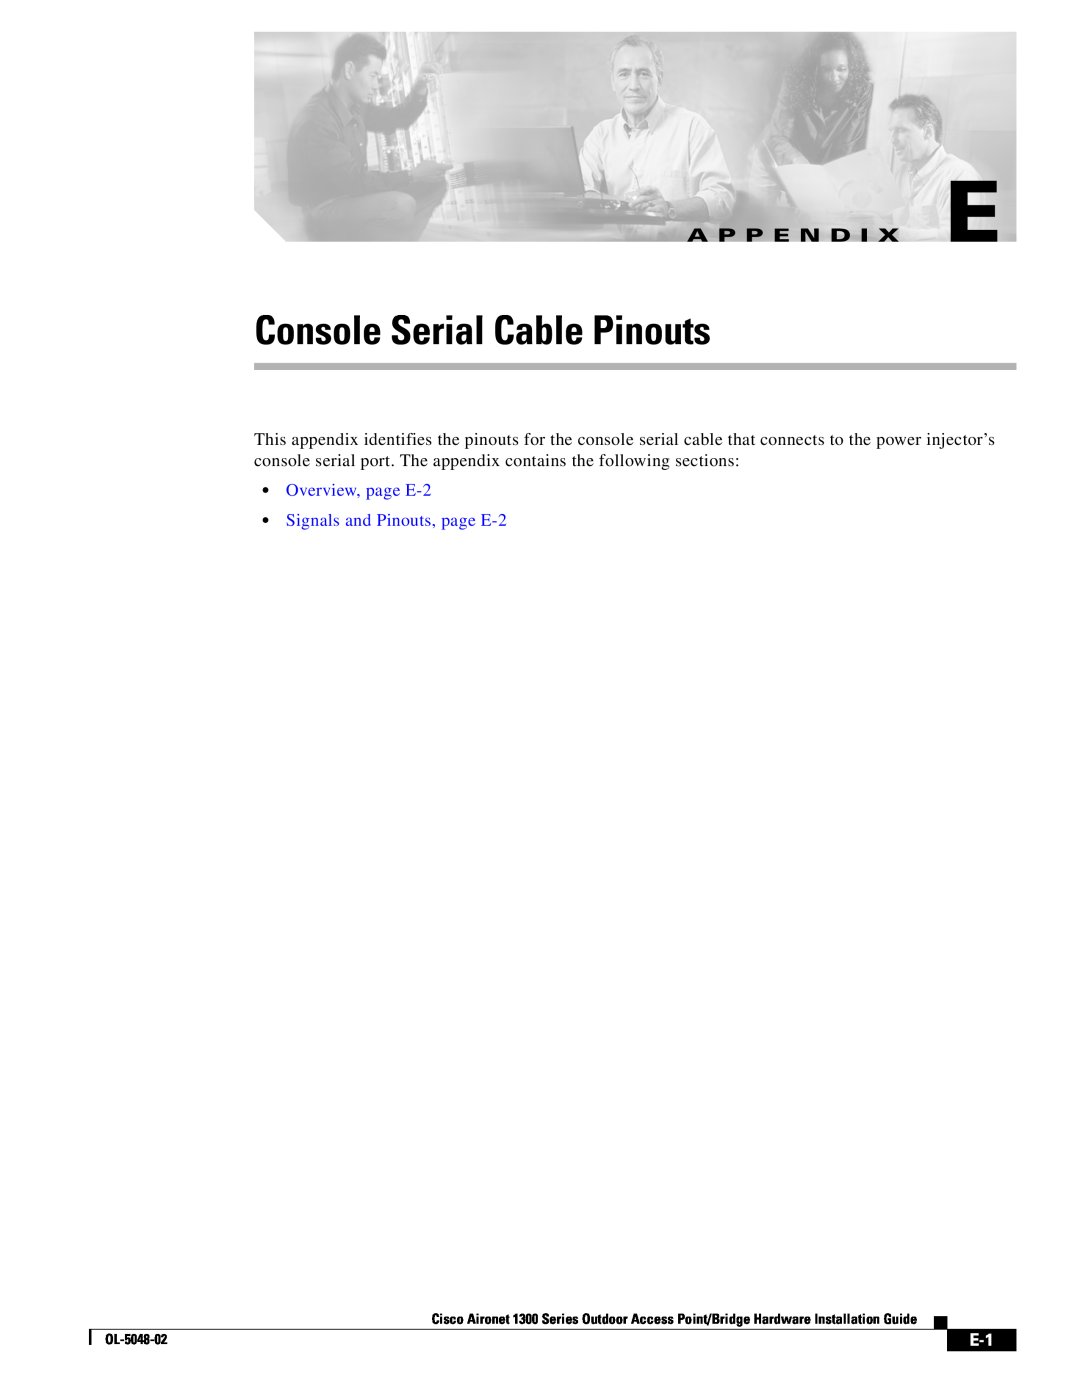 Cisco Systems 1300 Series manual Console Serial Cable Pinouts, A P P E N D I X E, OL-5048-02 